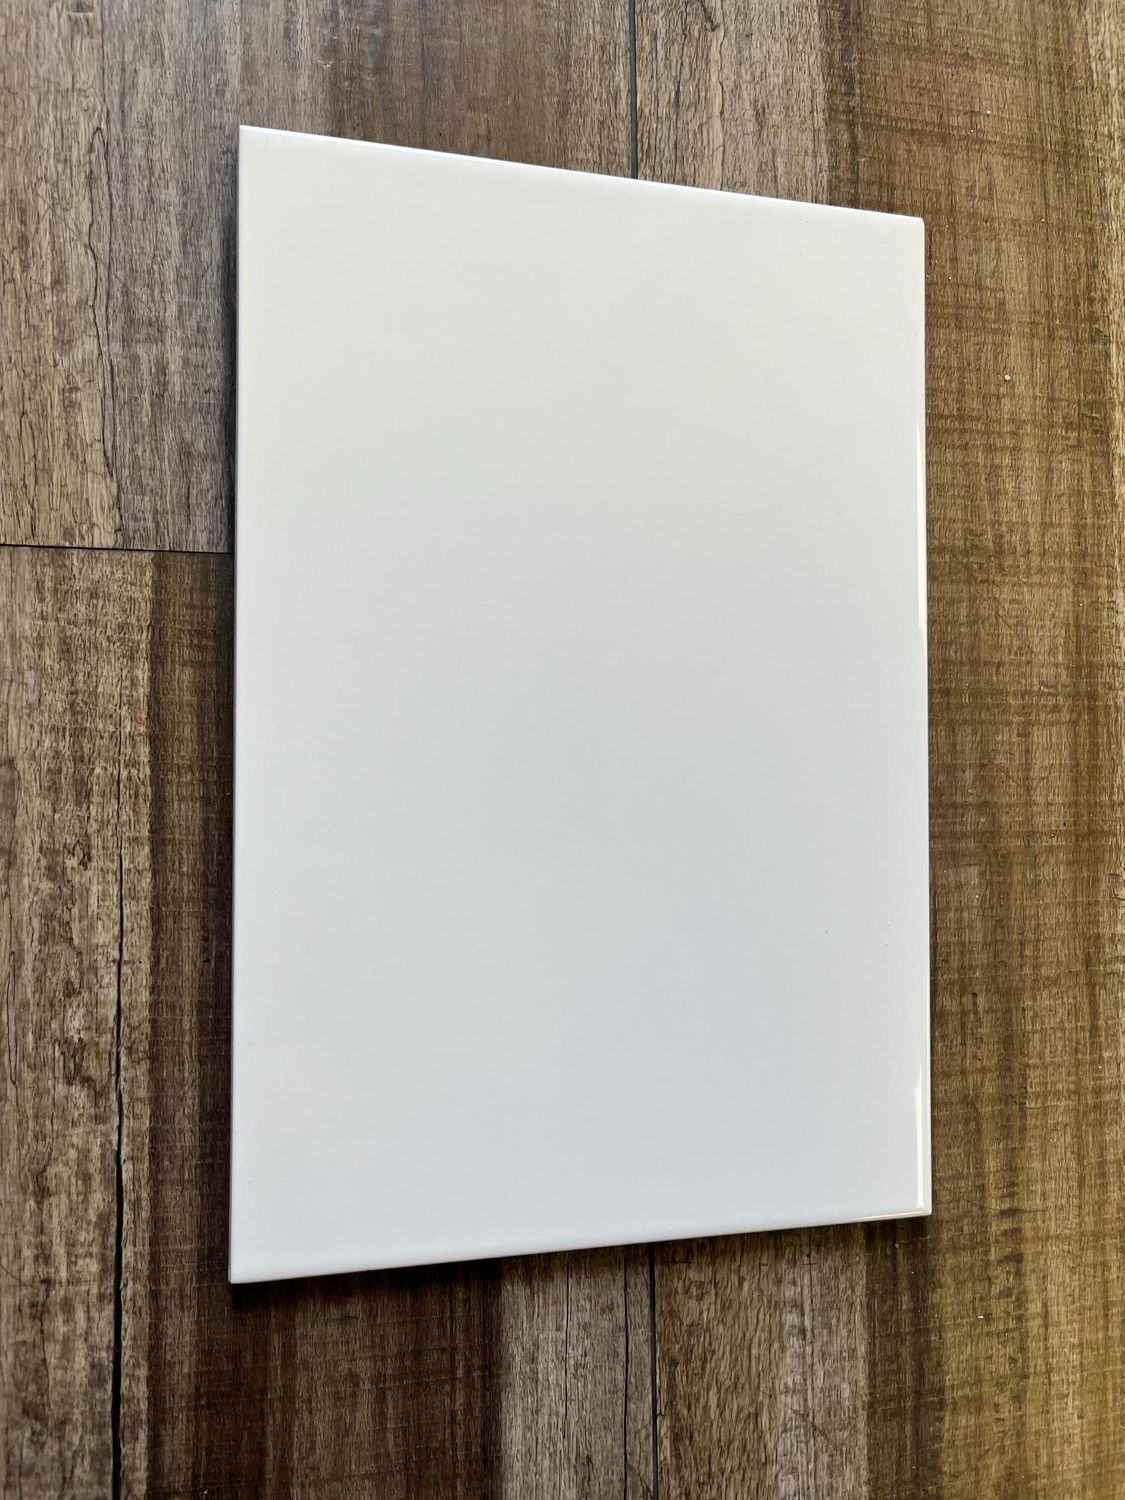 White 8x12 Glossy Ceramic Wall Tile (12 sq. ft. / case - 18 Pieces) for Kitchen backsplash, Bathroom Shower